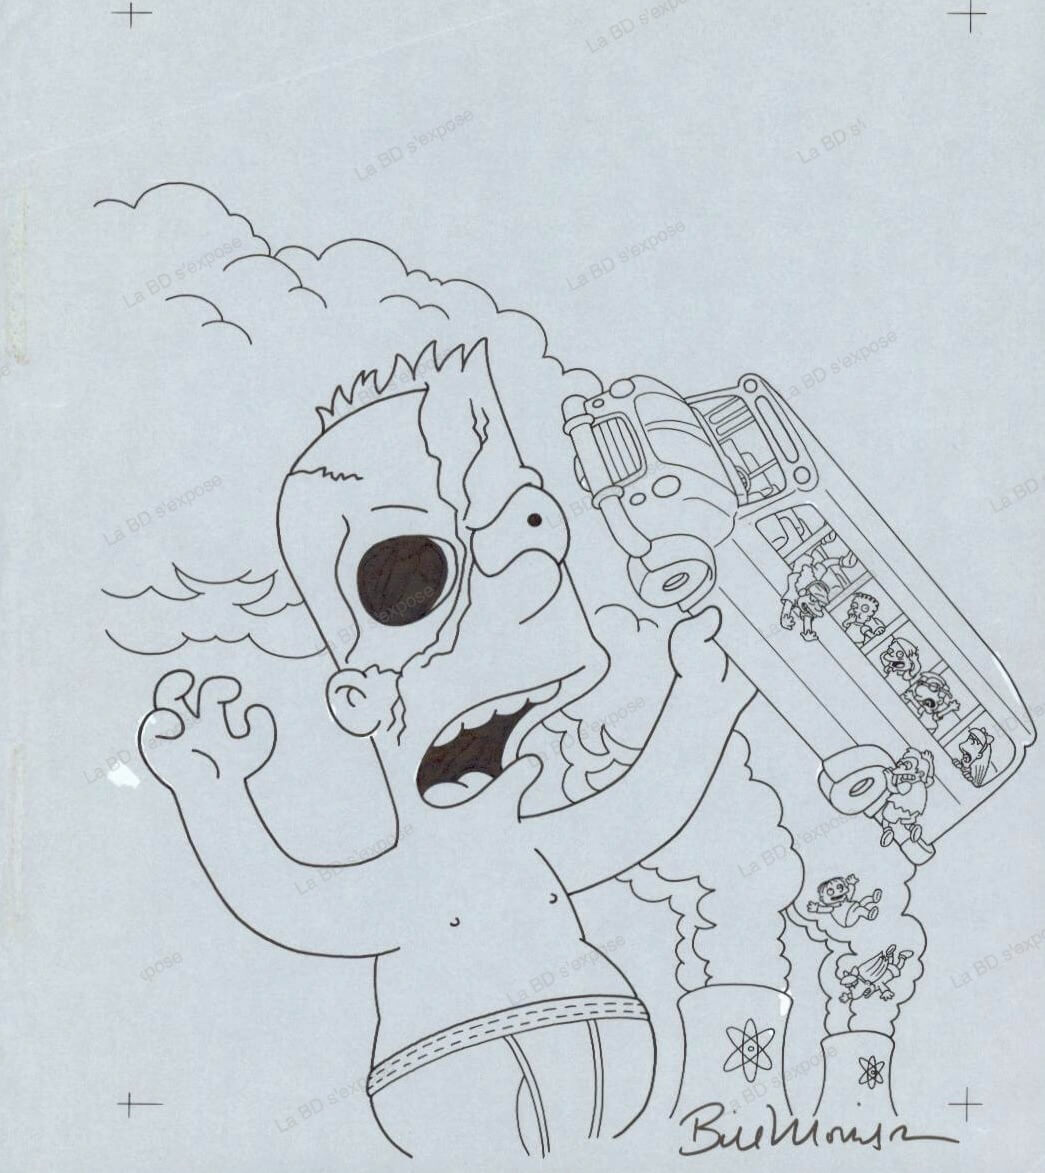 Planche Originale de bande dessinee Bart Simpson Treehouse of horror #8 encrage Bill Morrison La BD s'expose